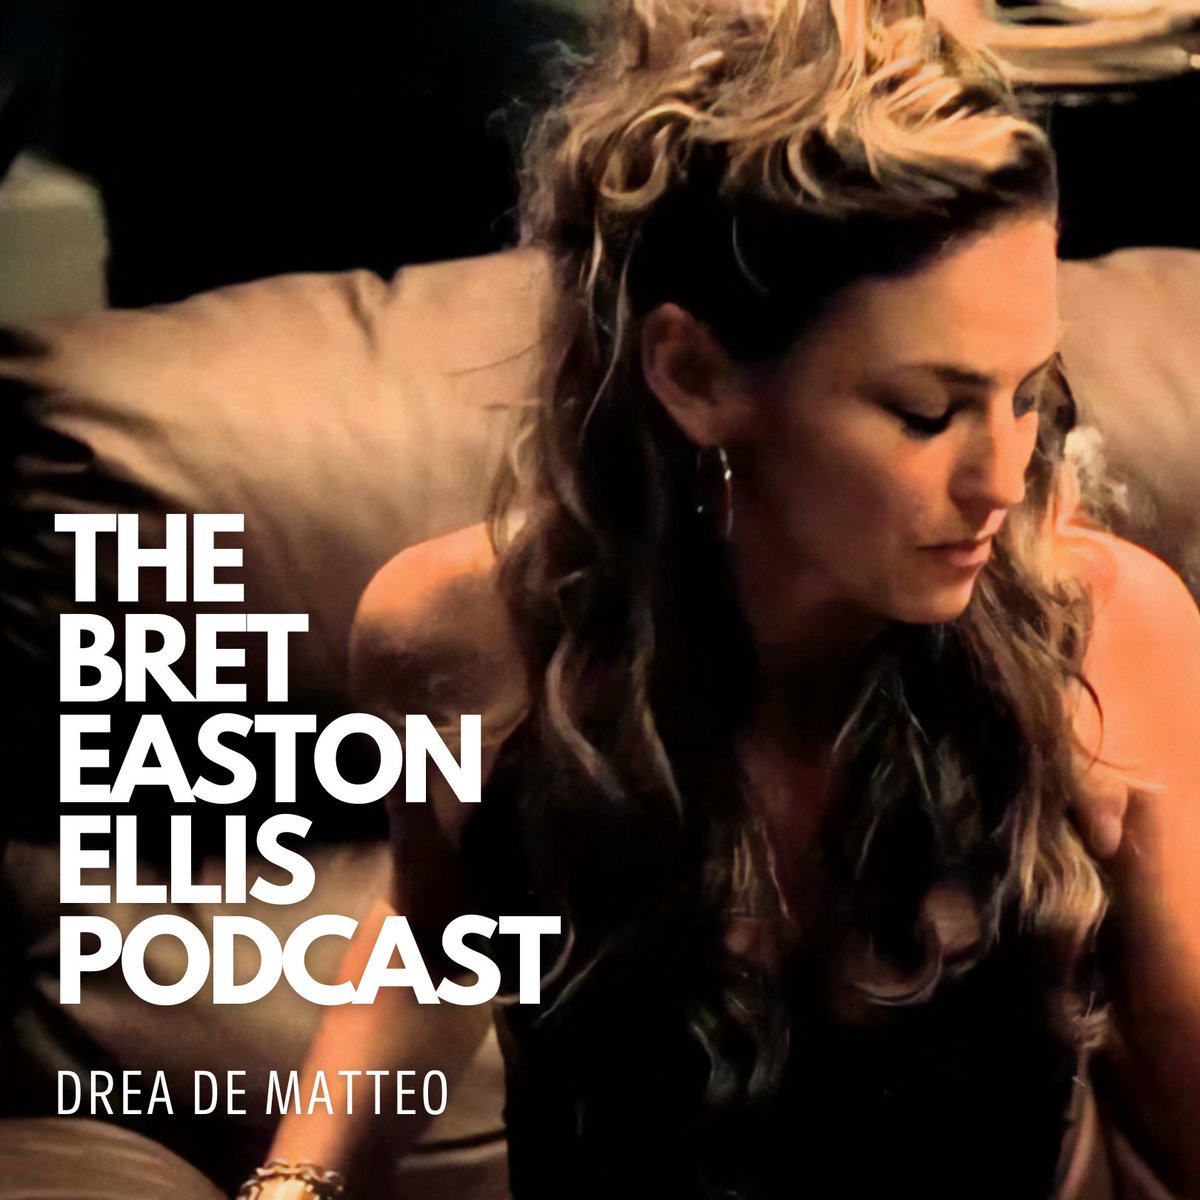 The Bret Easton Ellis Podcast - Season 7, Episode 46 - Drea de Matteo. bit.ly/beedrea